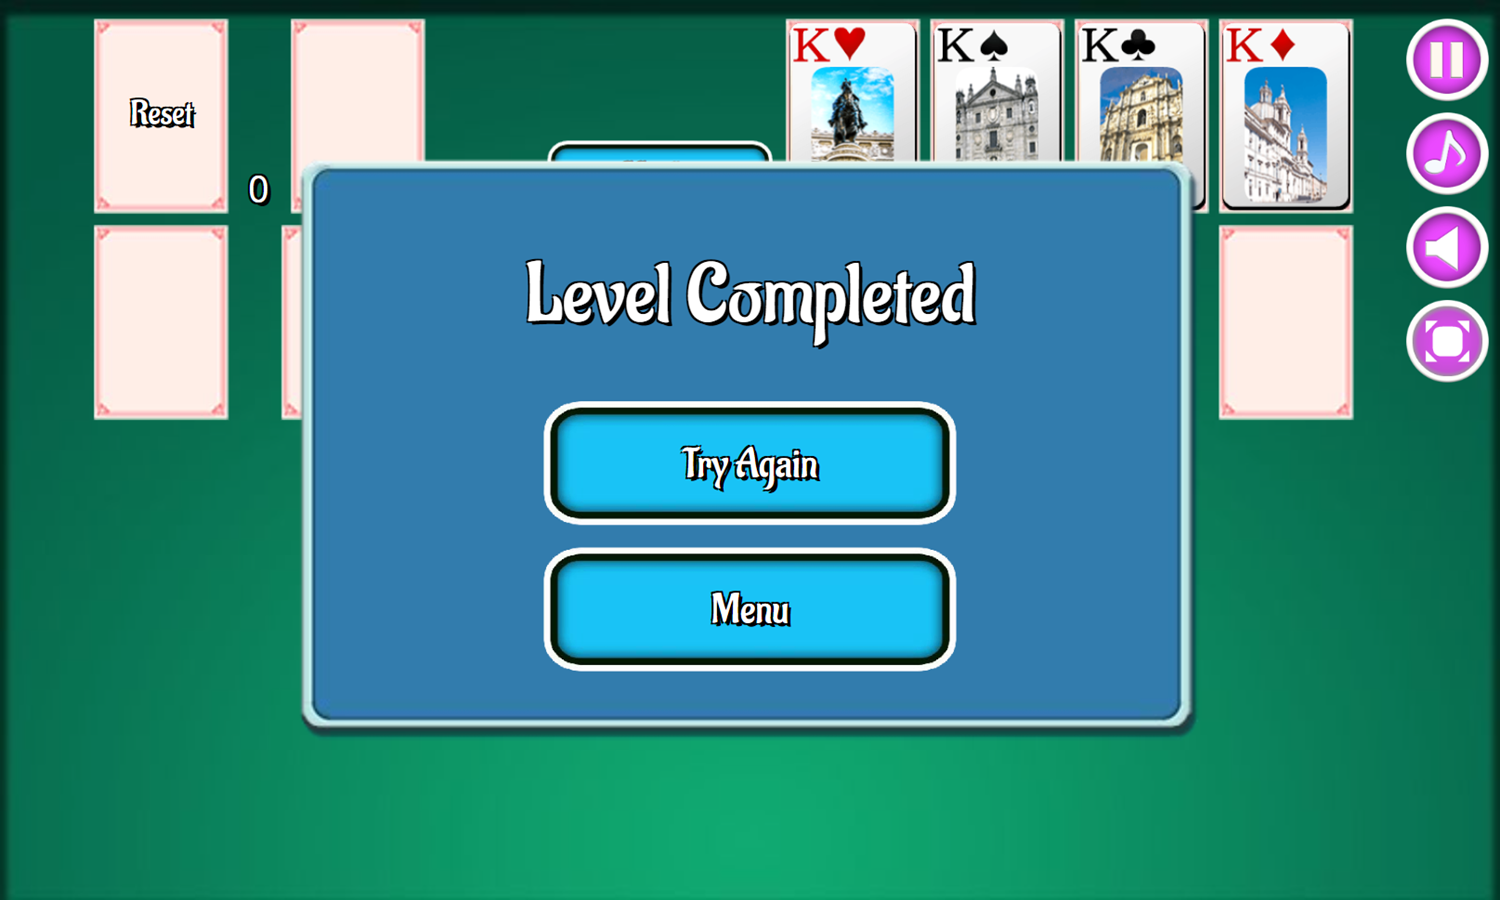 Classic Klondike Game Level Completed Screenshot.